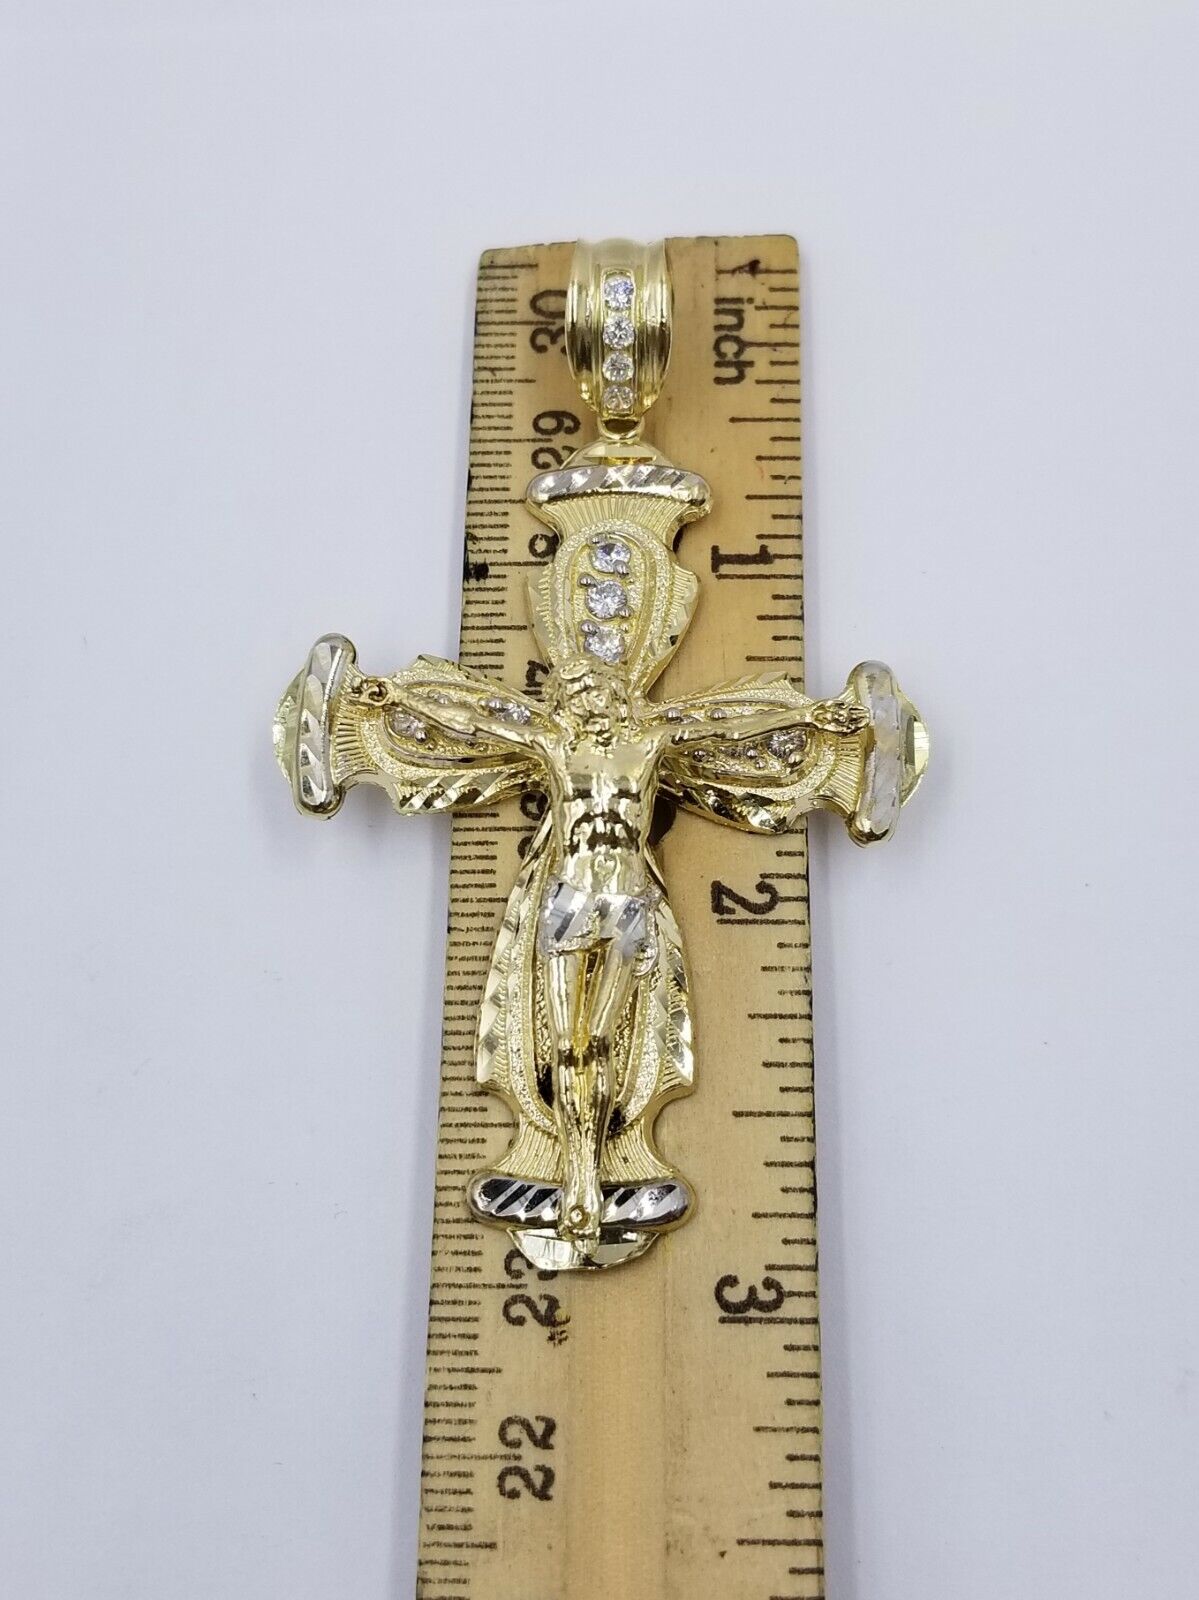 Real 10k Cuban Curb Link Necklace Pendant SET Jesus Crucifix Cross Chain